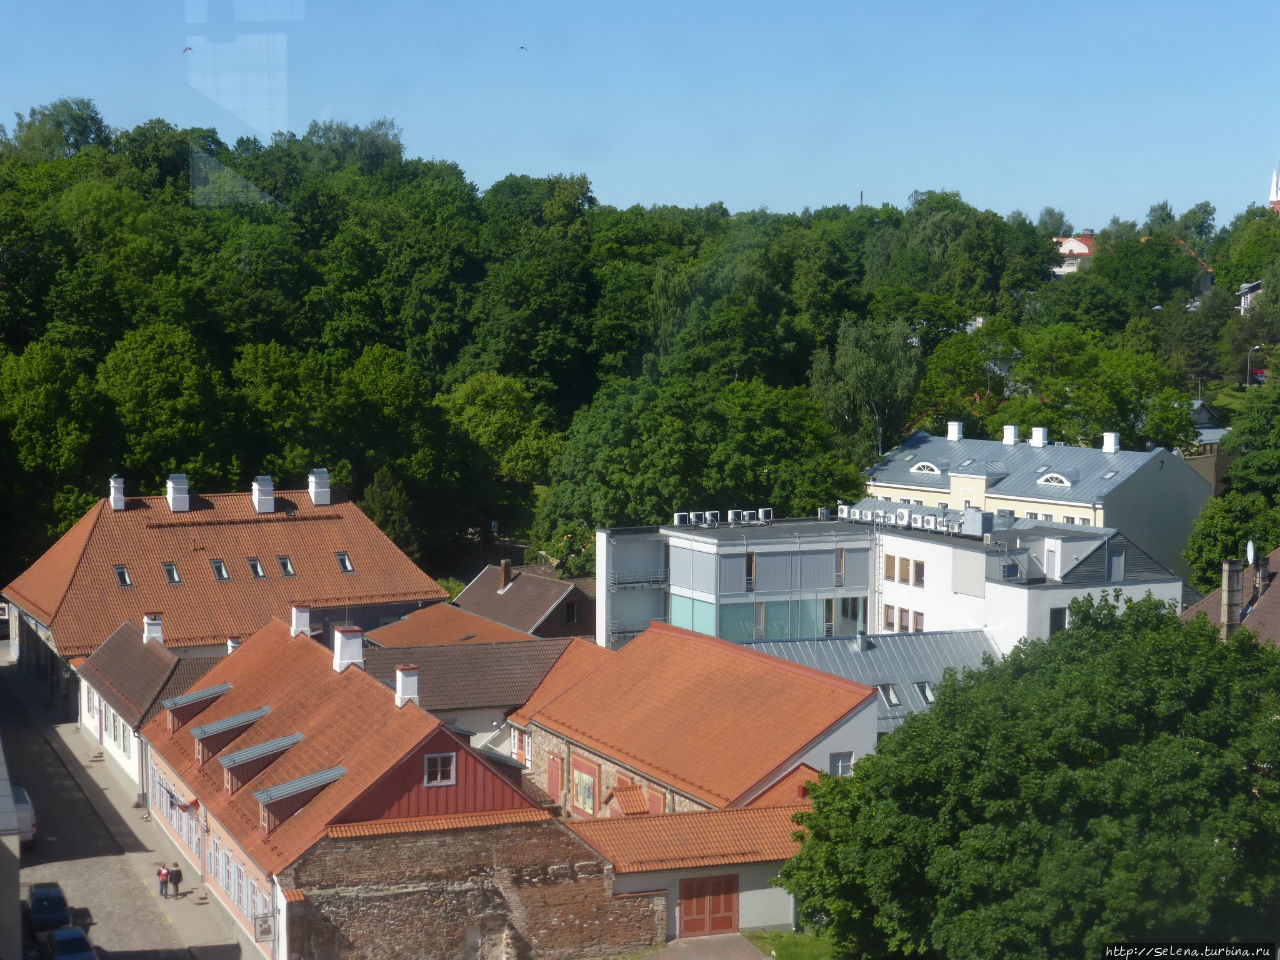 Панорама города с башни Тарту, Эстония